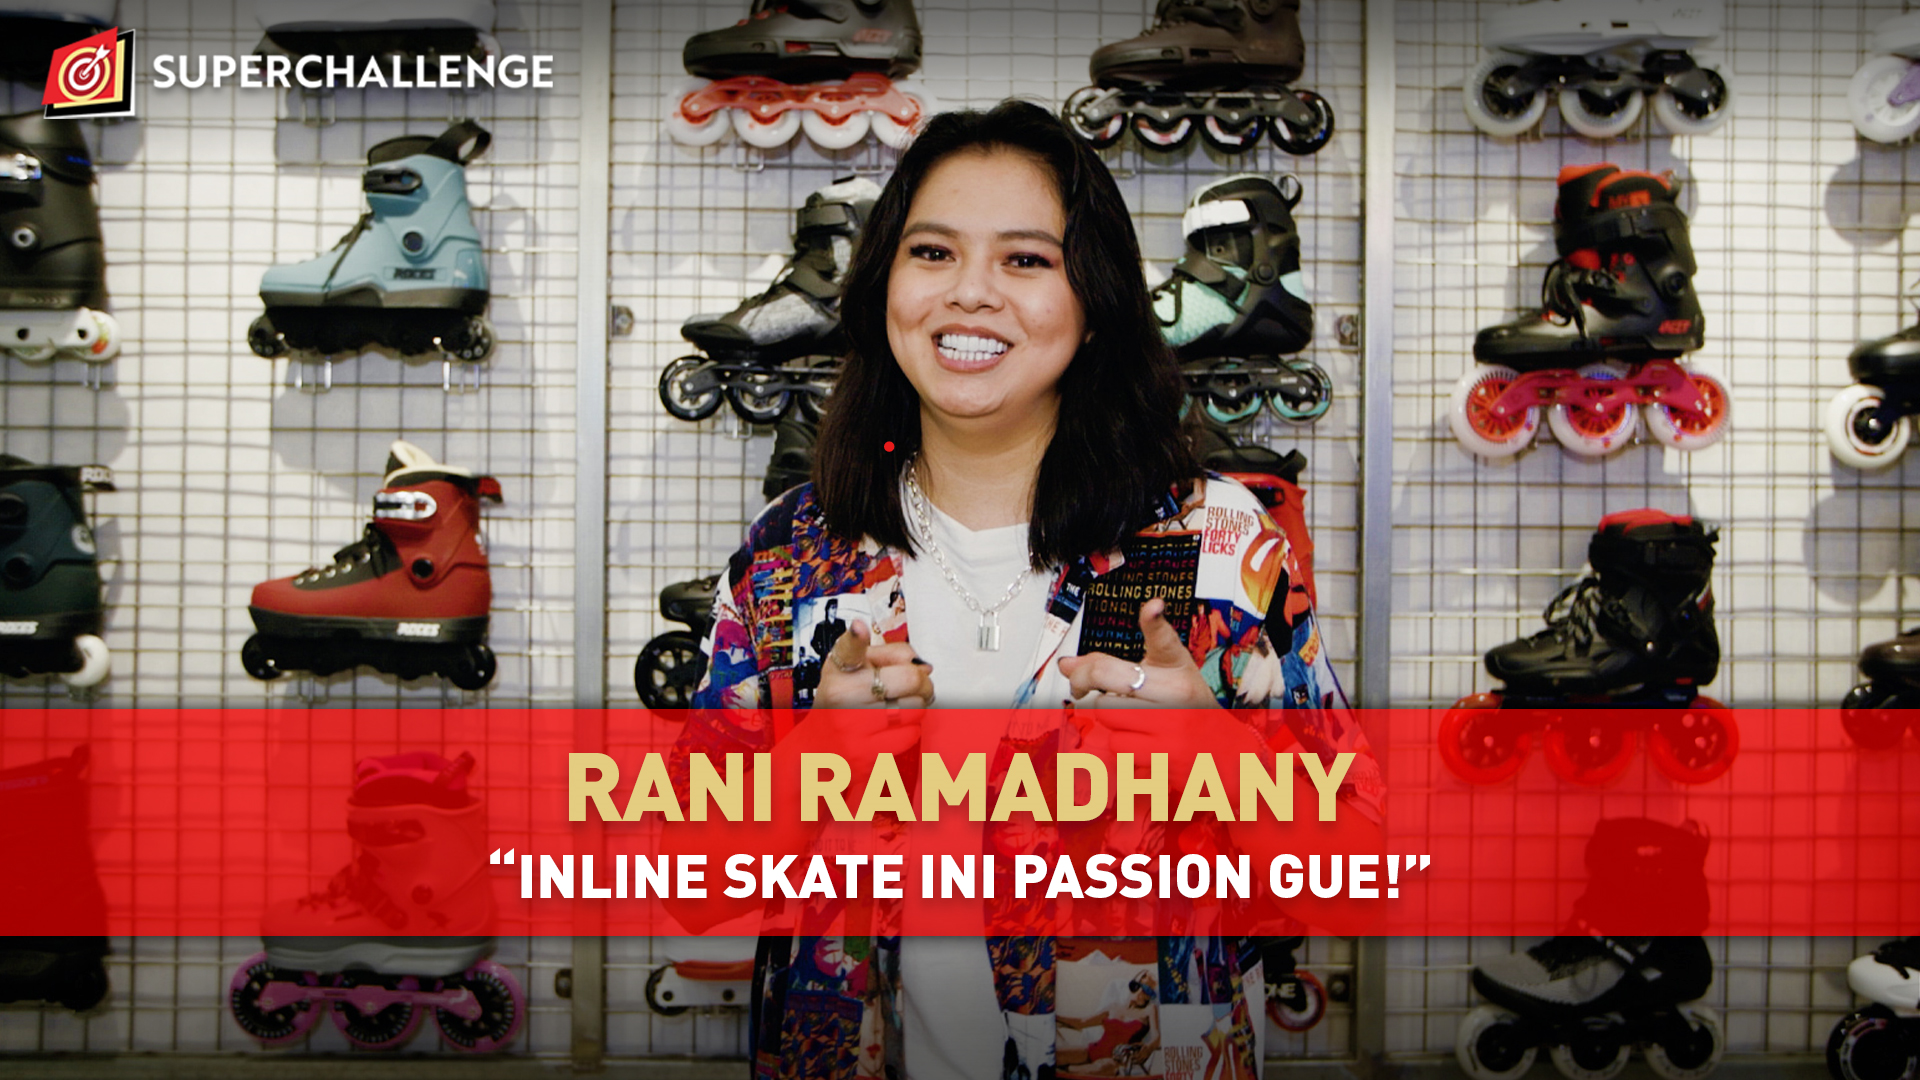 SUPERCHALLENGE-Rani Ramadhany "Inline Skate Ini Passion Gue!"